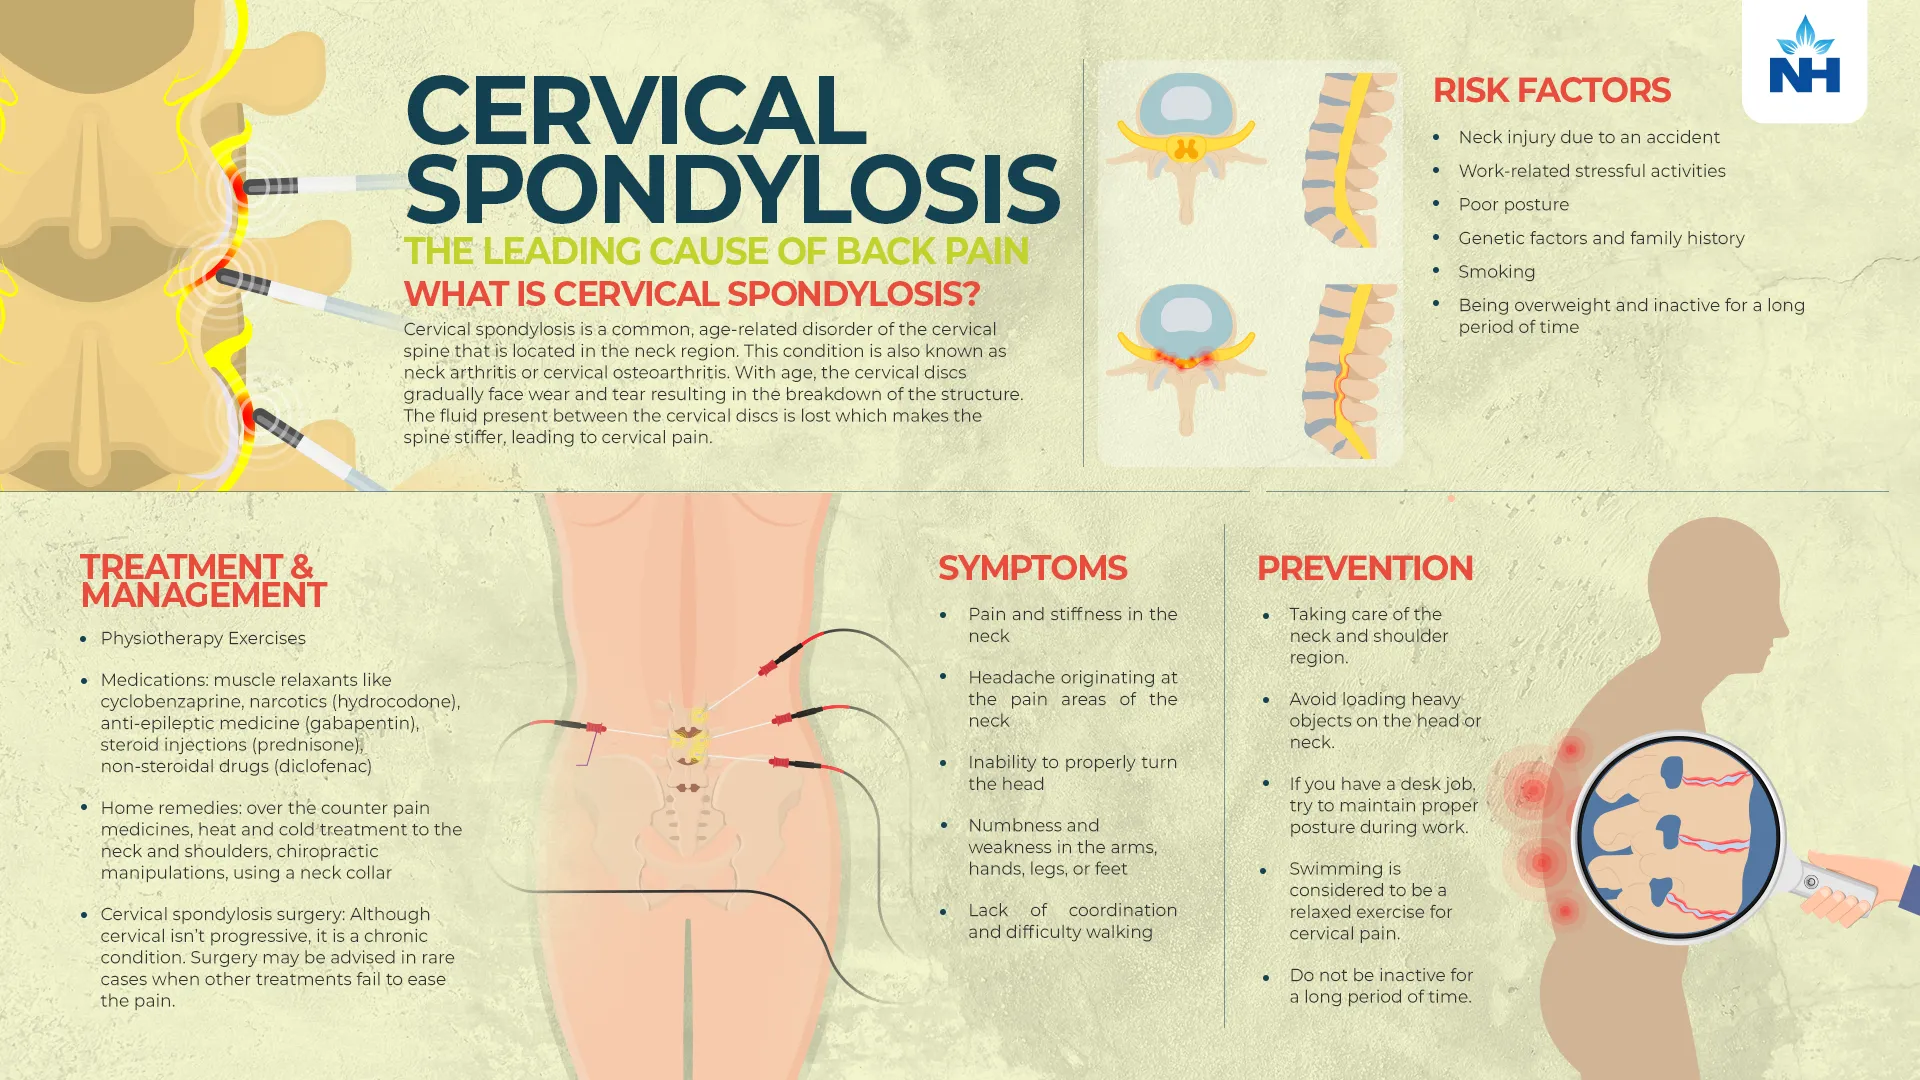 Thoracic Spondylosis: Causes, Symptoms & Treatment